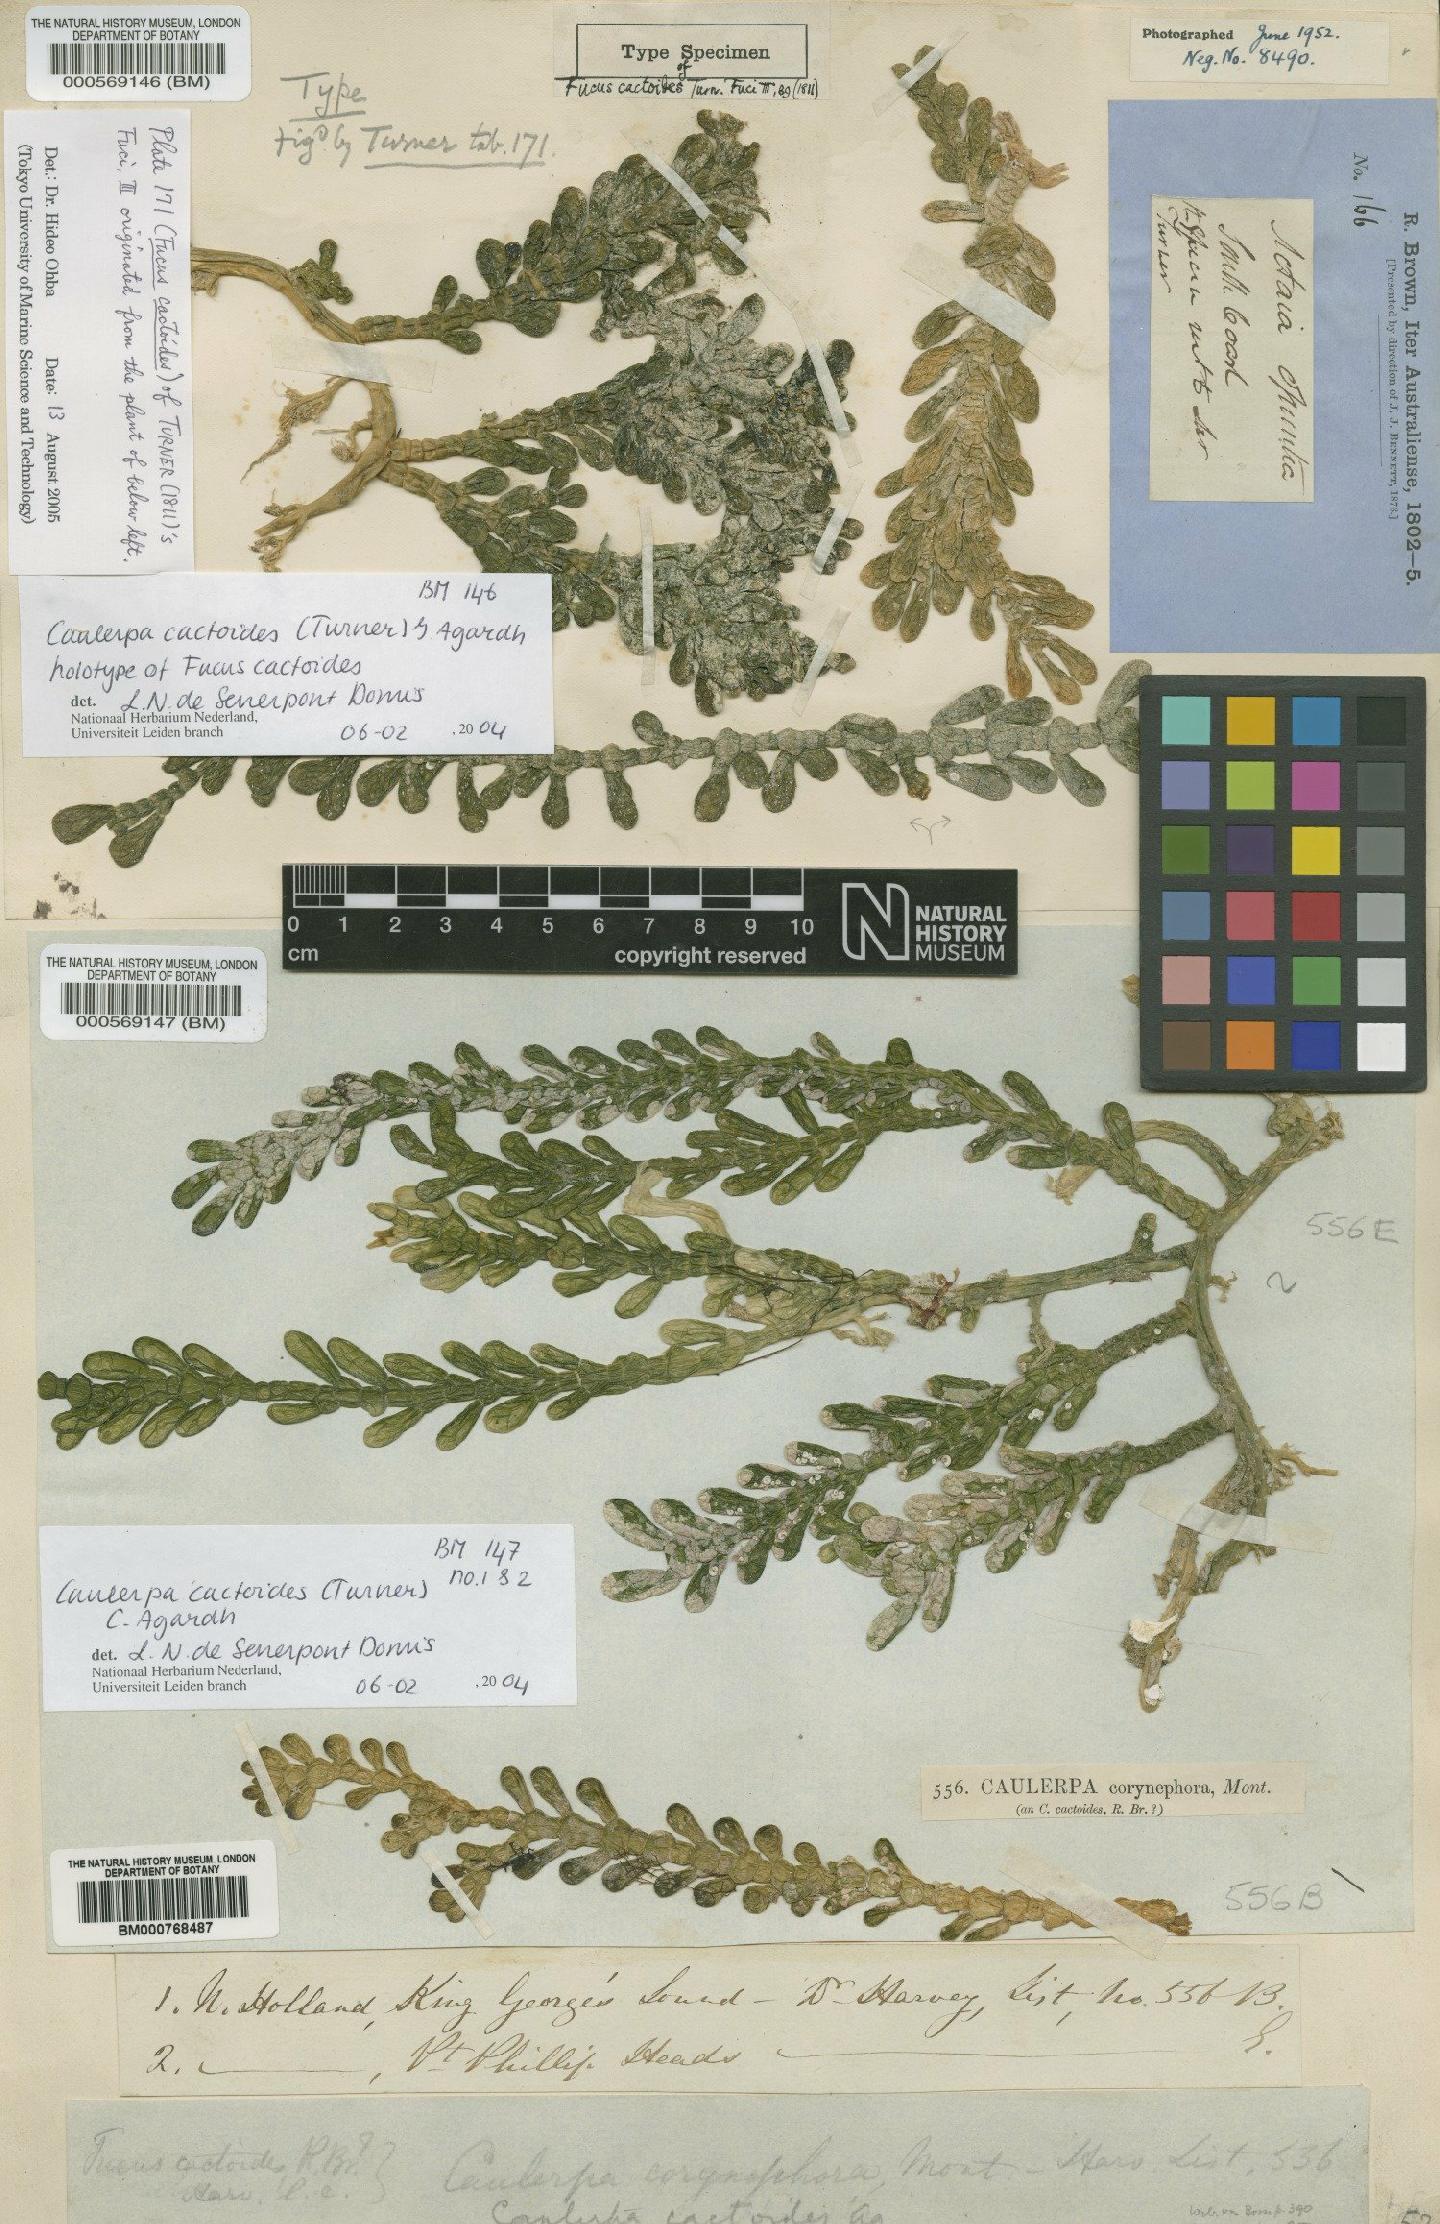 To NHMUK collection (Caulerpa cactoides (Turner) C.Agardh; NHMUK:ecatalogue:4859817)